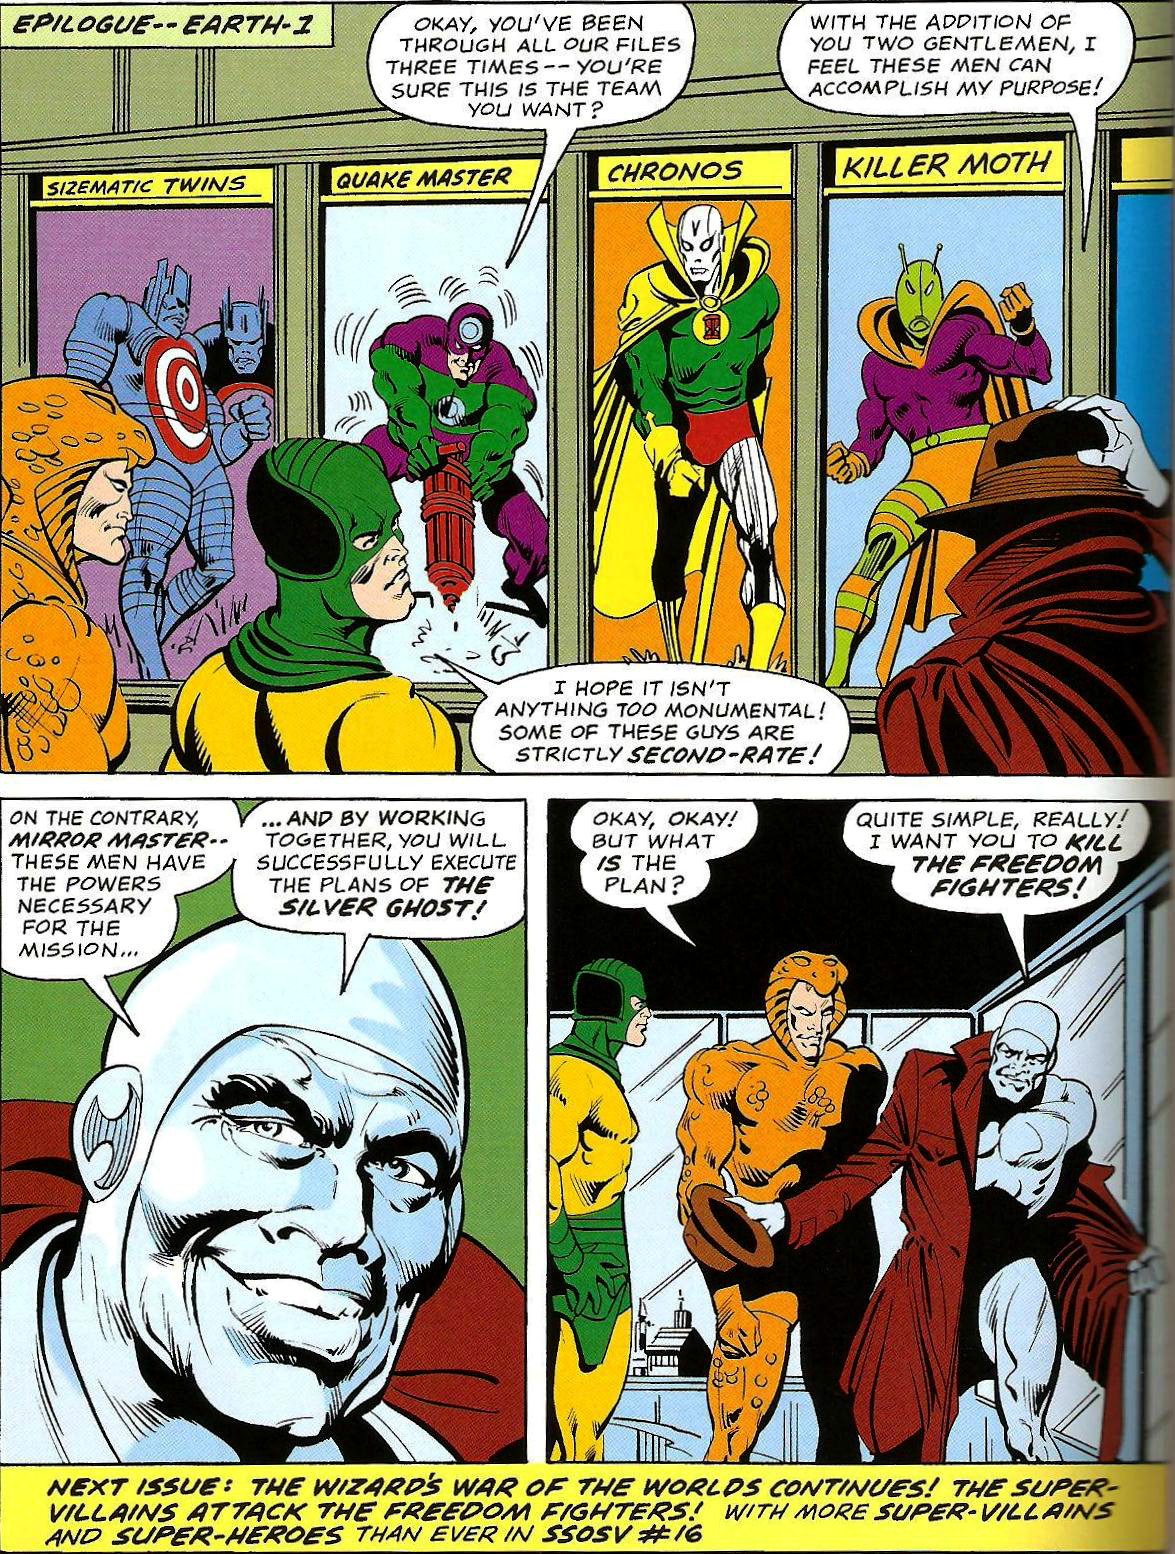 From Secret Society of Super-Villains #15 (1978)